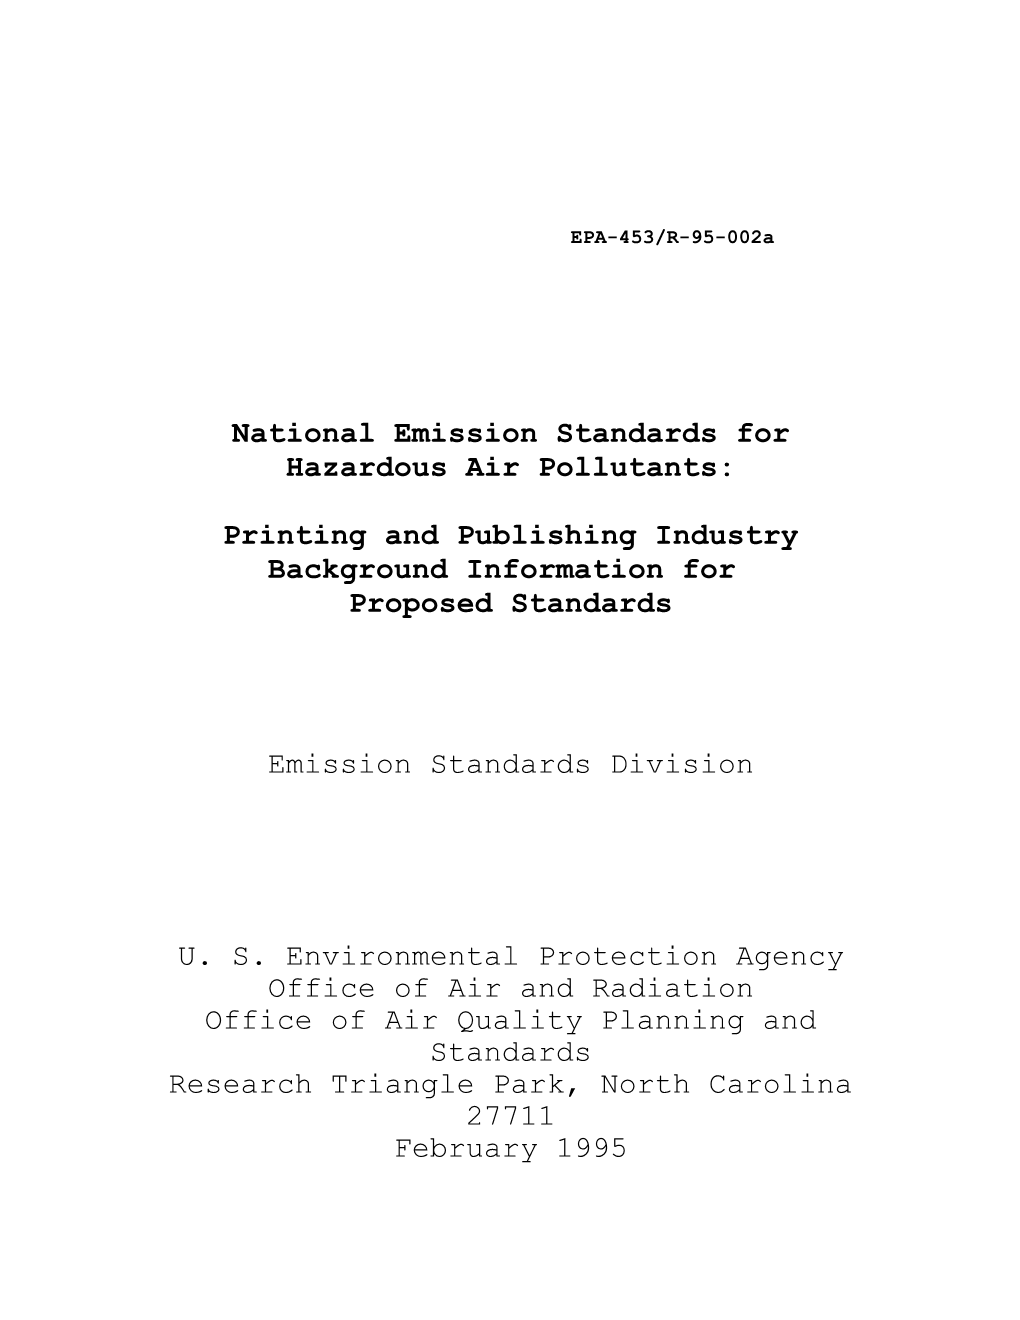 National Emission Standards for Hazardous Air Pollutants: Printing